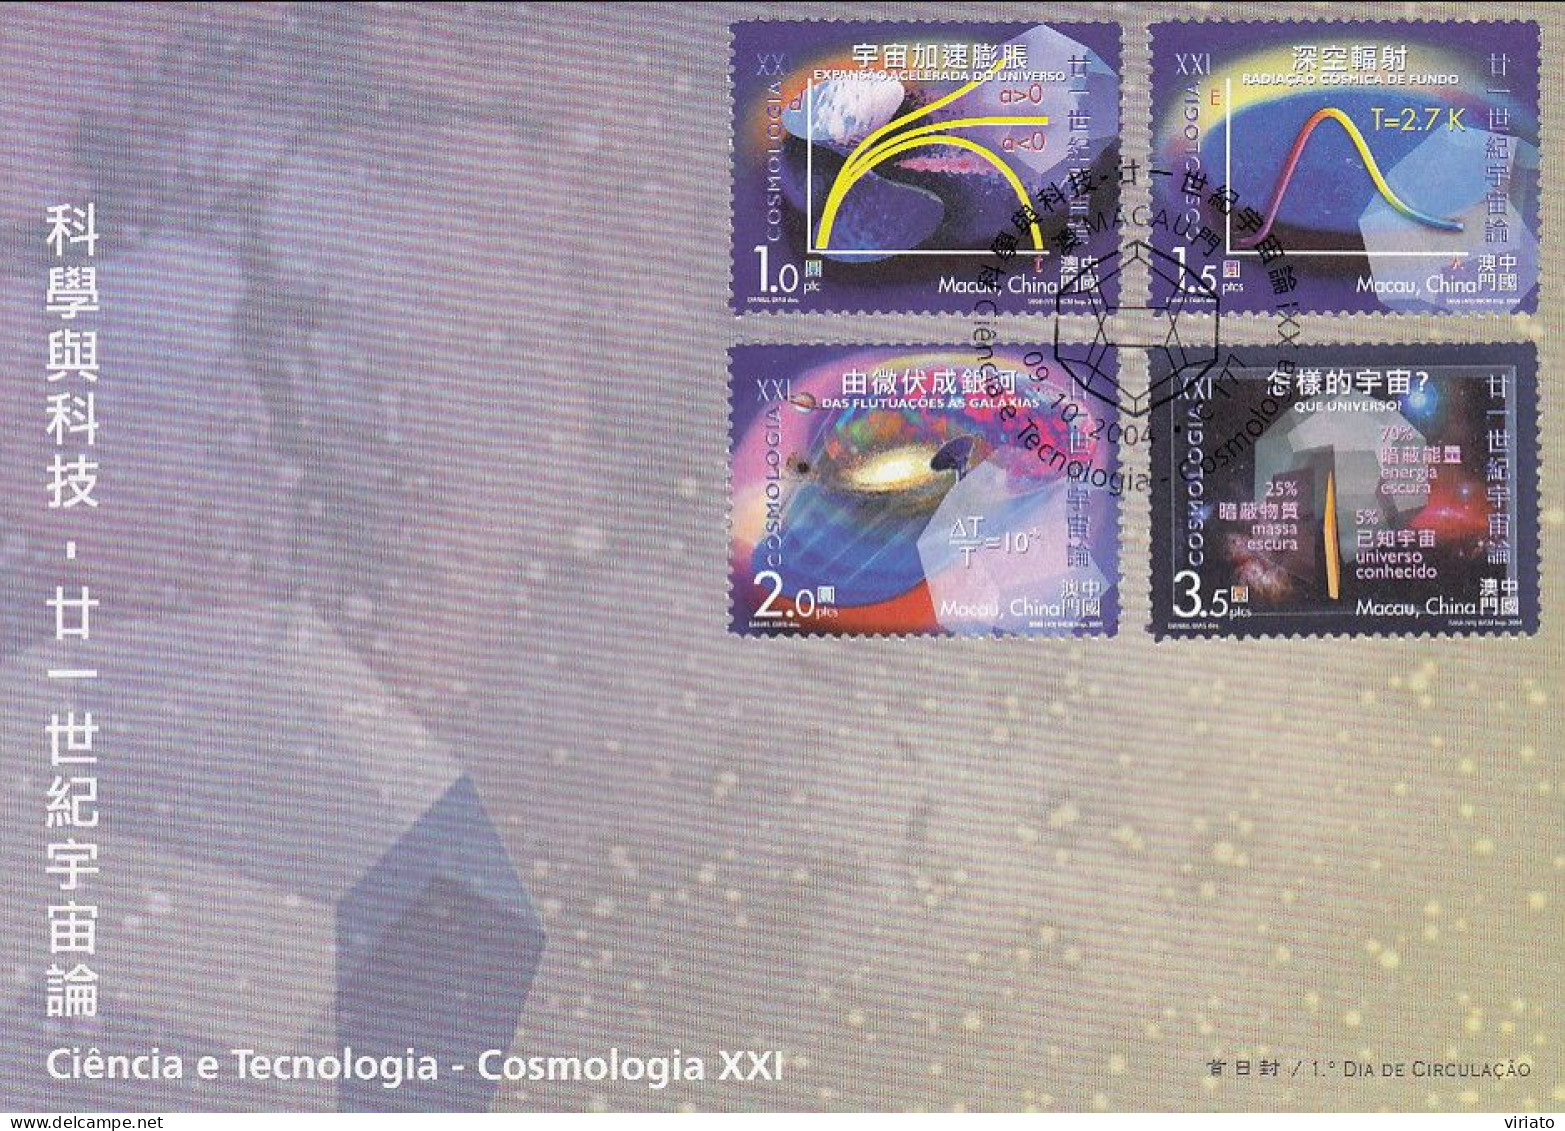 ENA058 - Ciência E Tecnologia - Cosmologia XXI - 09.10.2004 - FDC